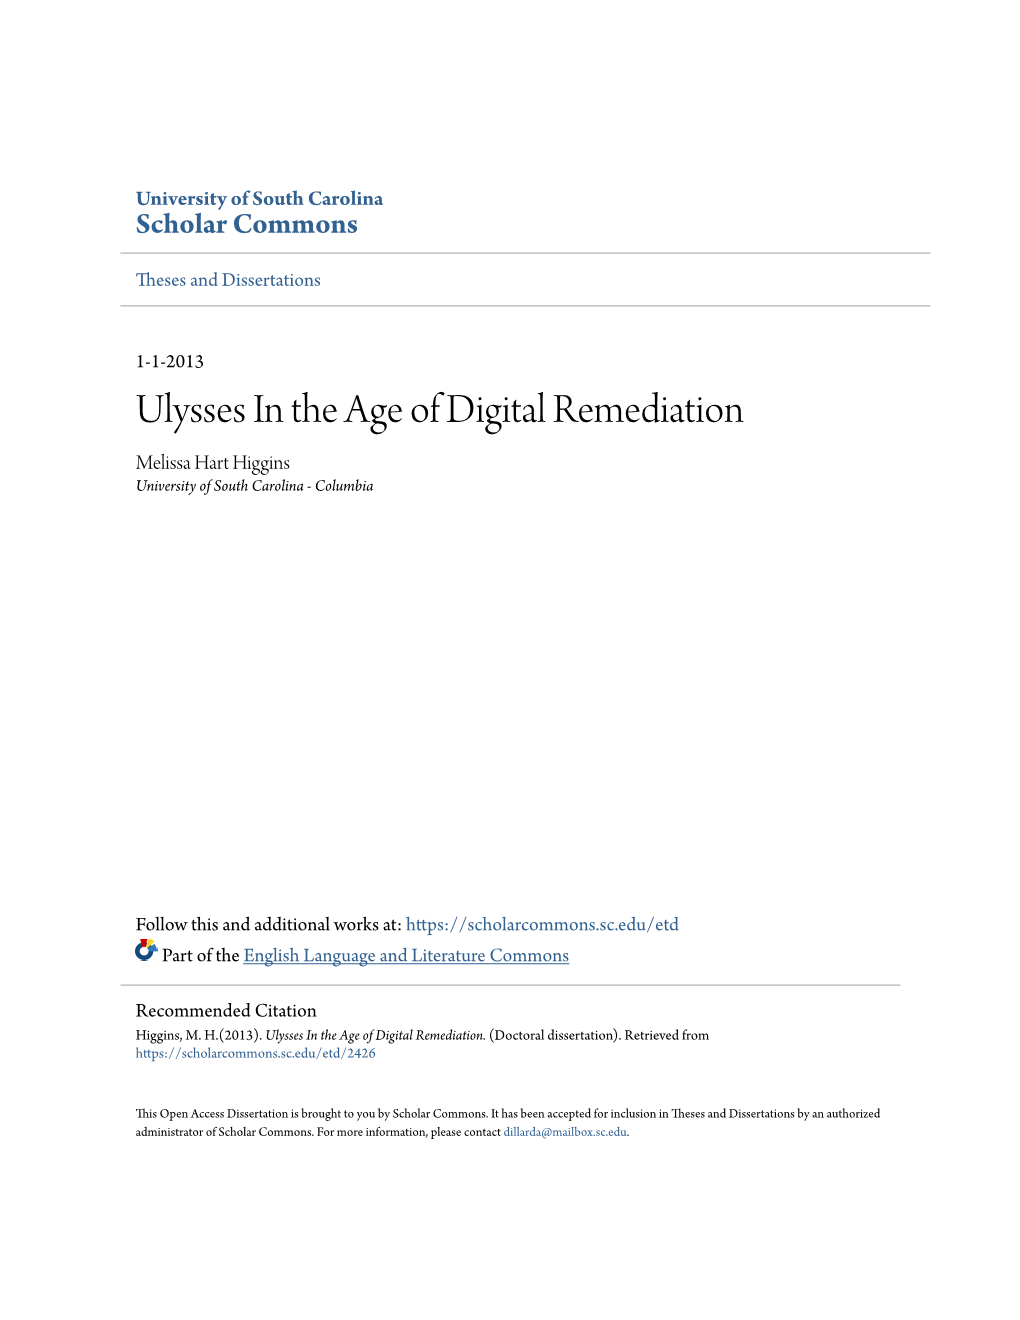 Ulysses in the Age of Digital Remediation Melissa Hart Higgins University of South Carolina - Columbia